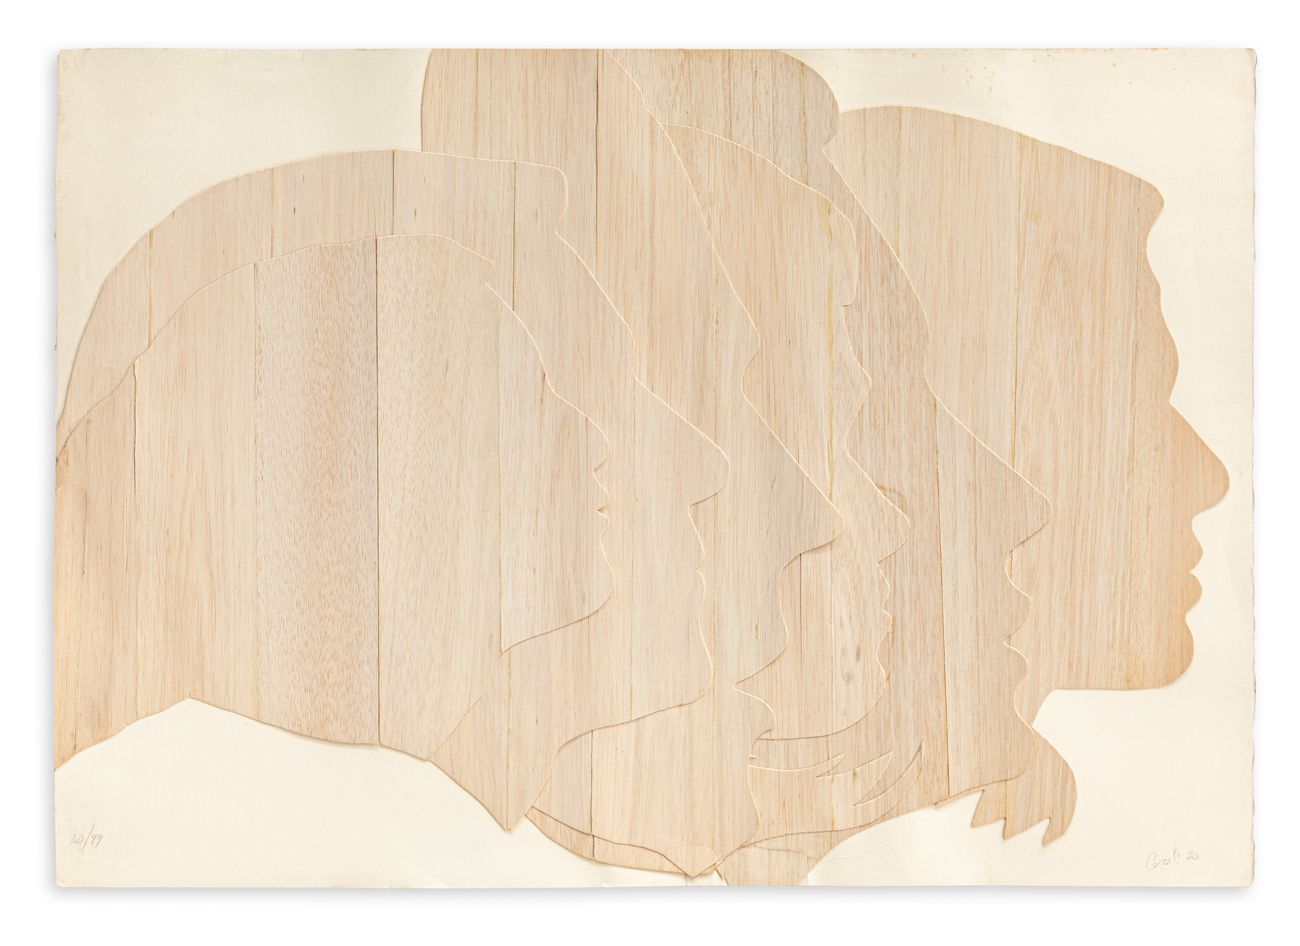 MARIO CEROLI (1938) - Profili, 1970 Profilés en bois de balsa appliqués sur du c&hellip;